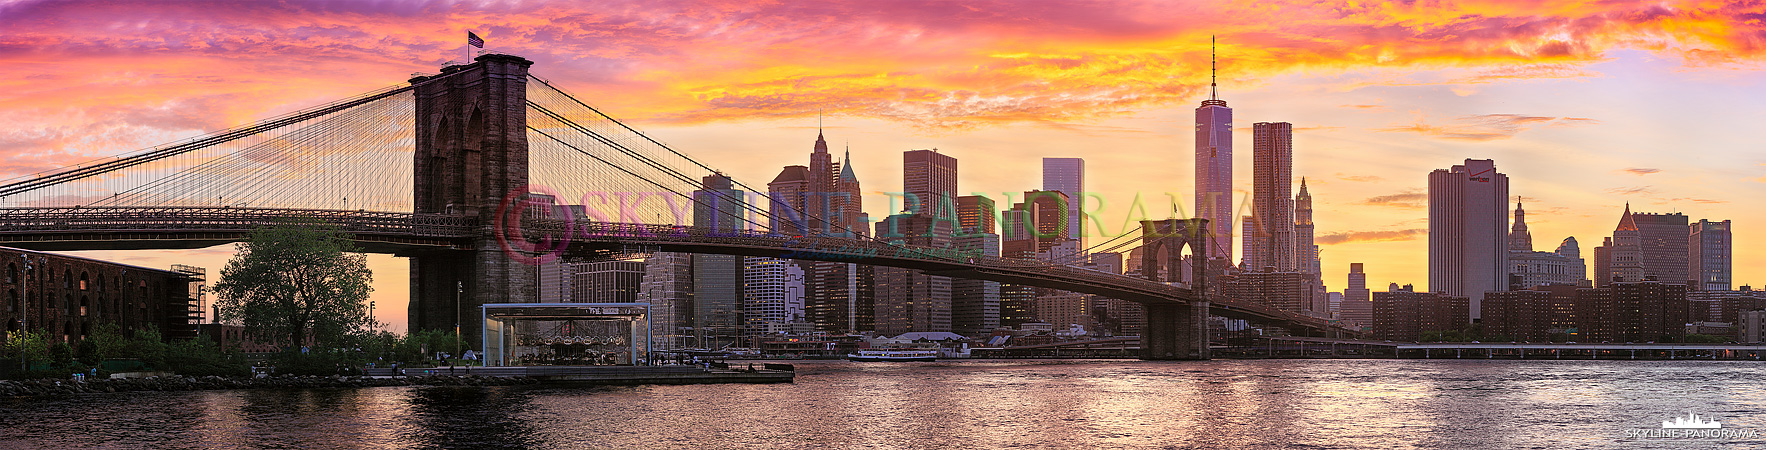 Skyline New York zum Sonnenuntergang (p_00679)